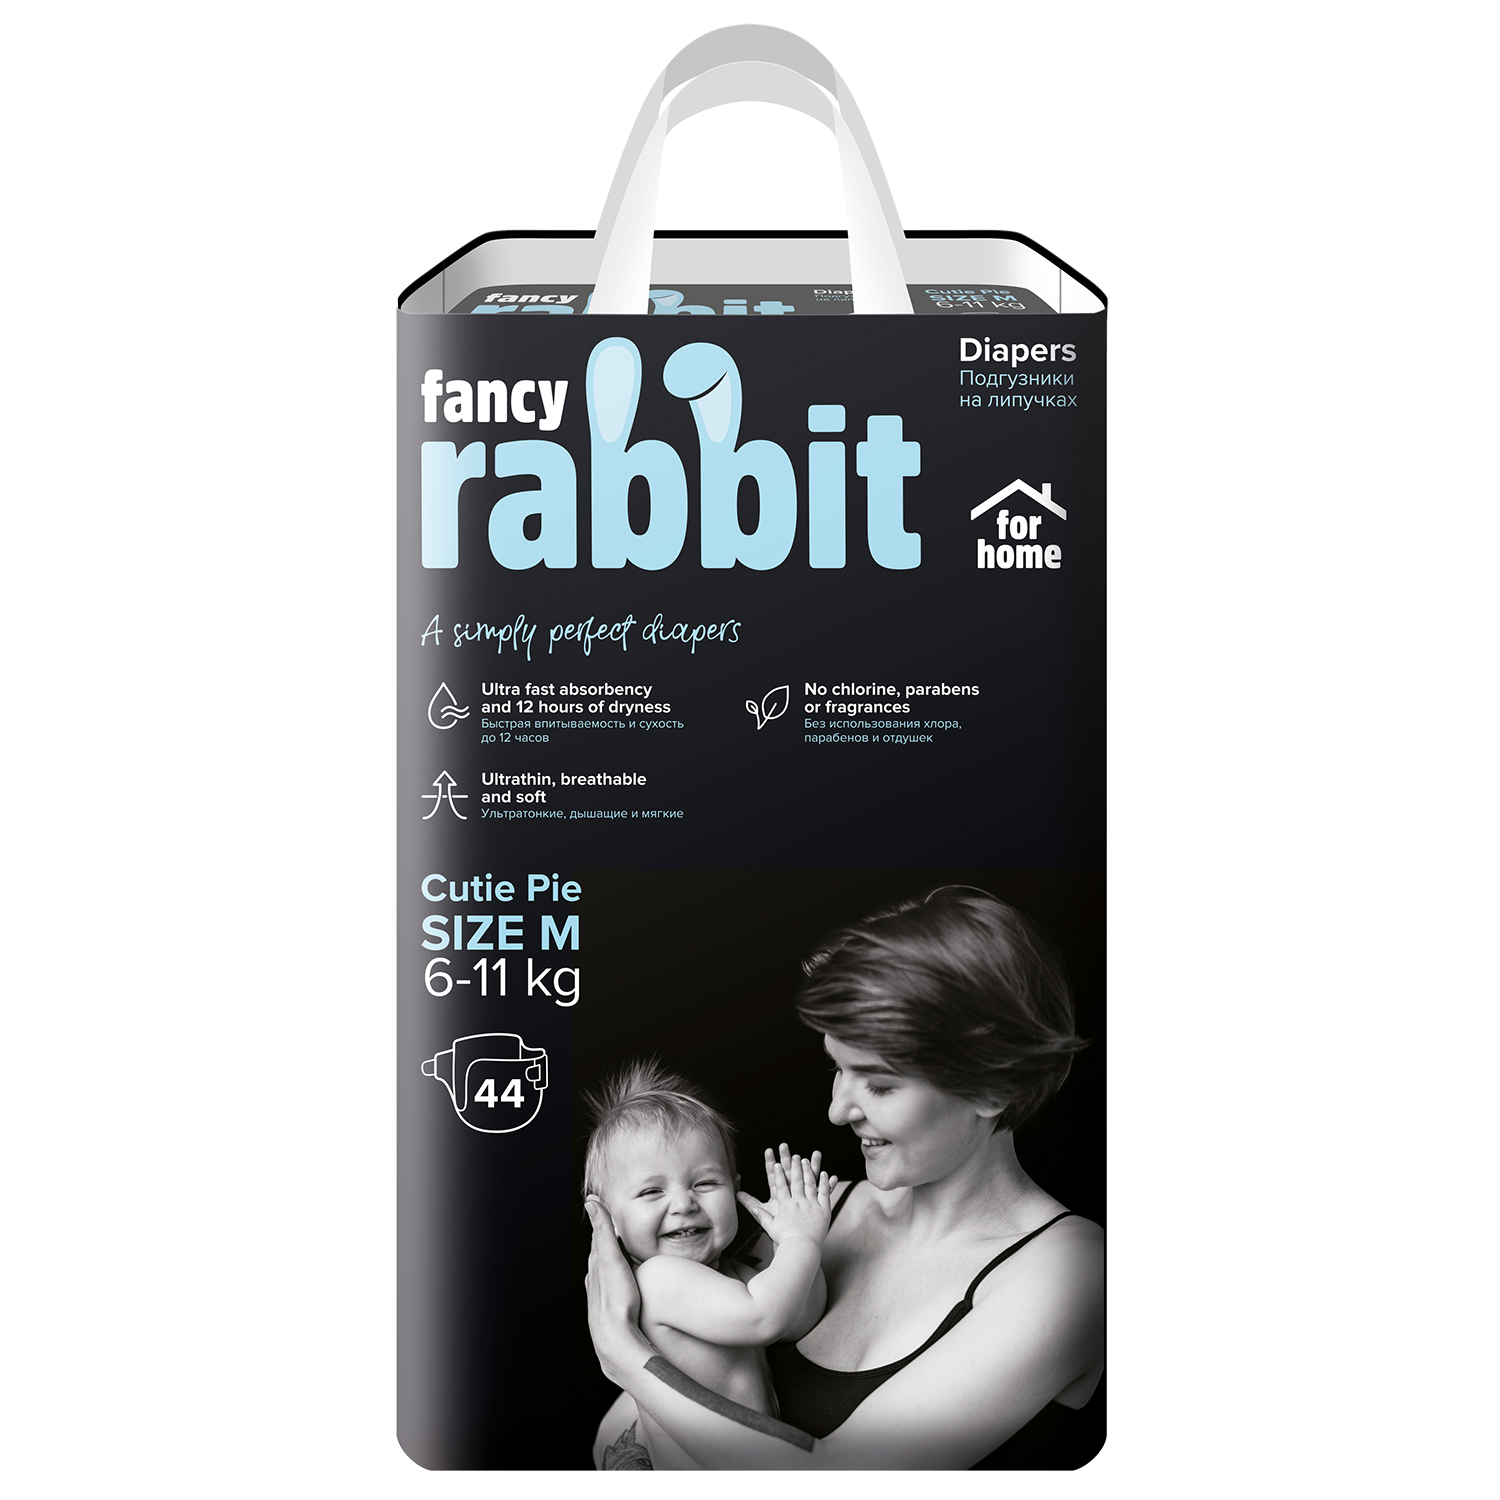 Трусики-подгузники Fancy Rabbit for home 6-11 кг, размер М, 44 шт fancy rabbit fancy rabbit for home трусики подгузники 6 11 кг м 44 шт